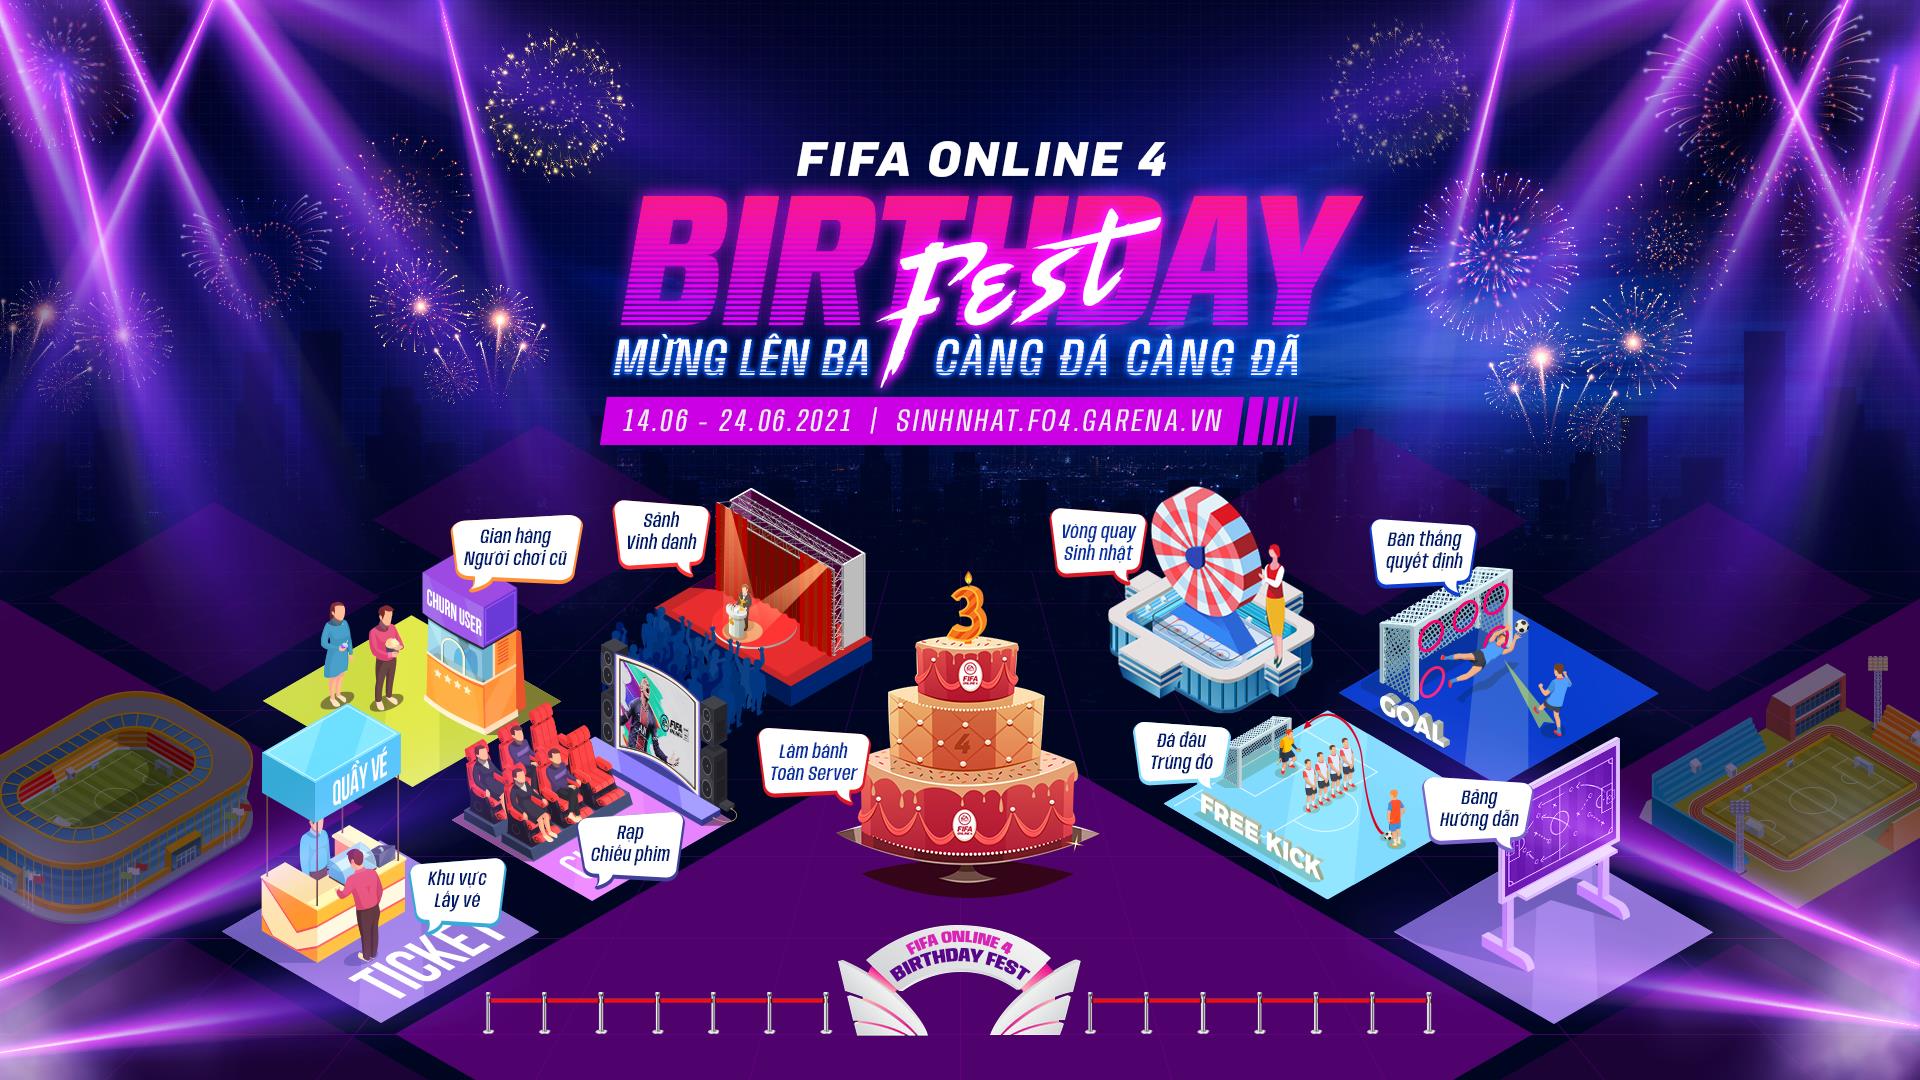  SINH NHẬT 4 TUỔI  EA Sports FIFA Online 4 Vietnam  Facebook